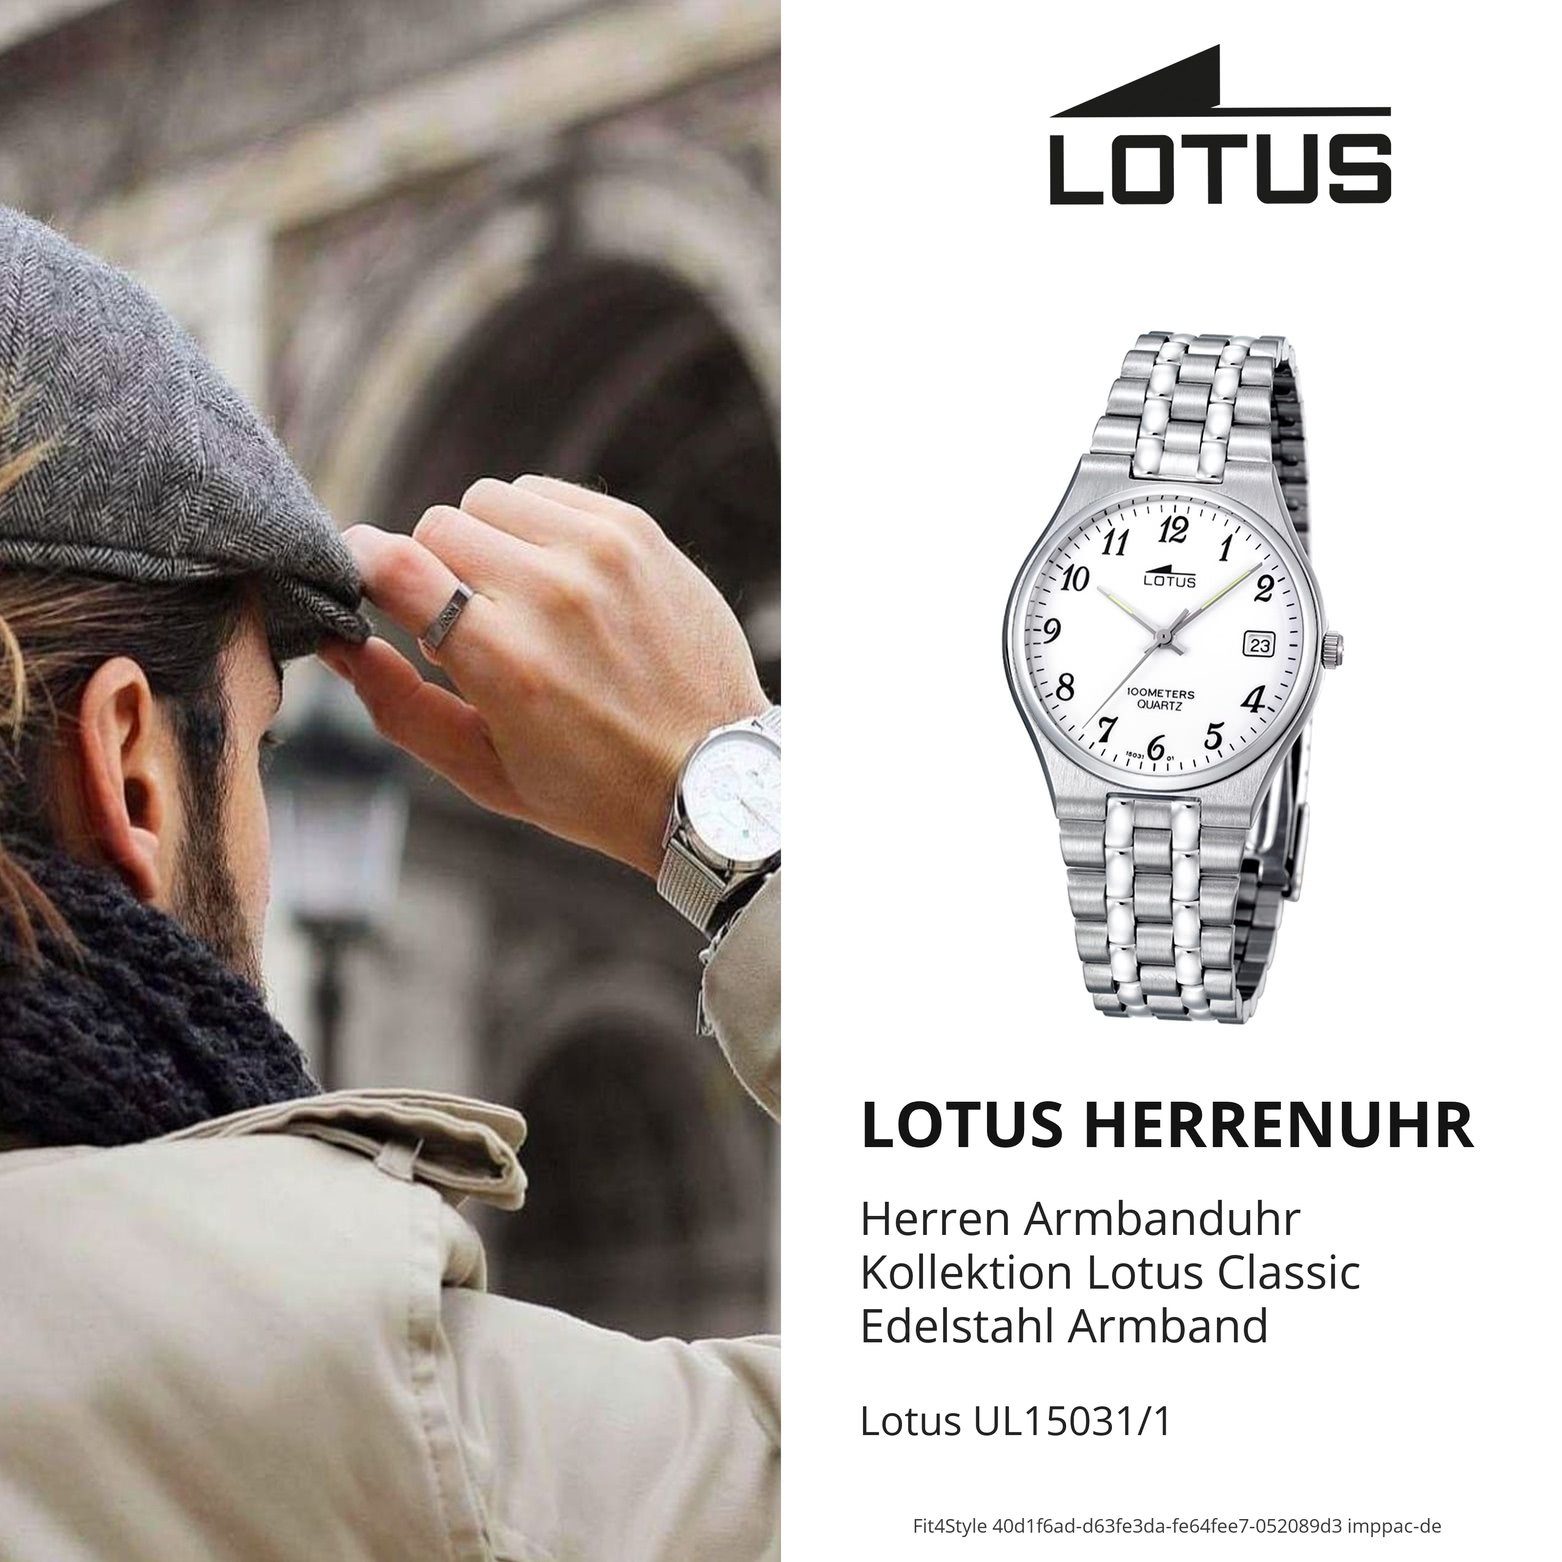 rund, Lotus Herren Herren Armbanduhr mittel Quarzuhr L15031/1, Uhr Edelstahlarmband silber (ca. Lotus 34,5mm), Elegant